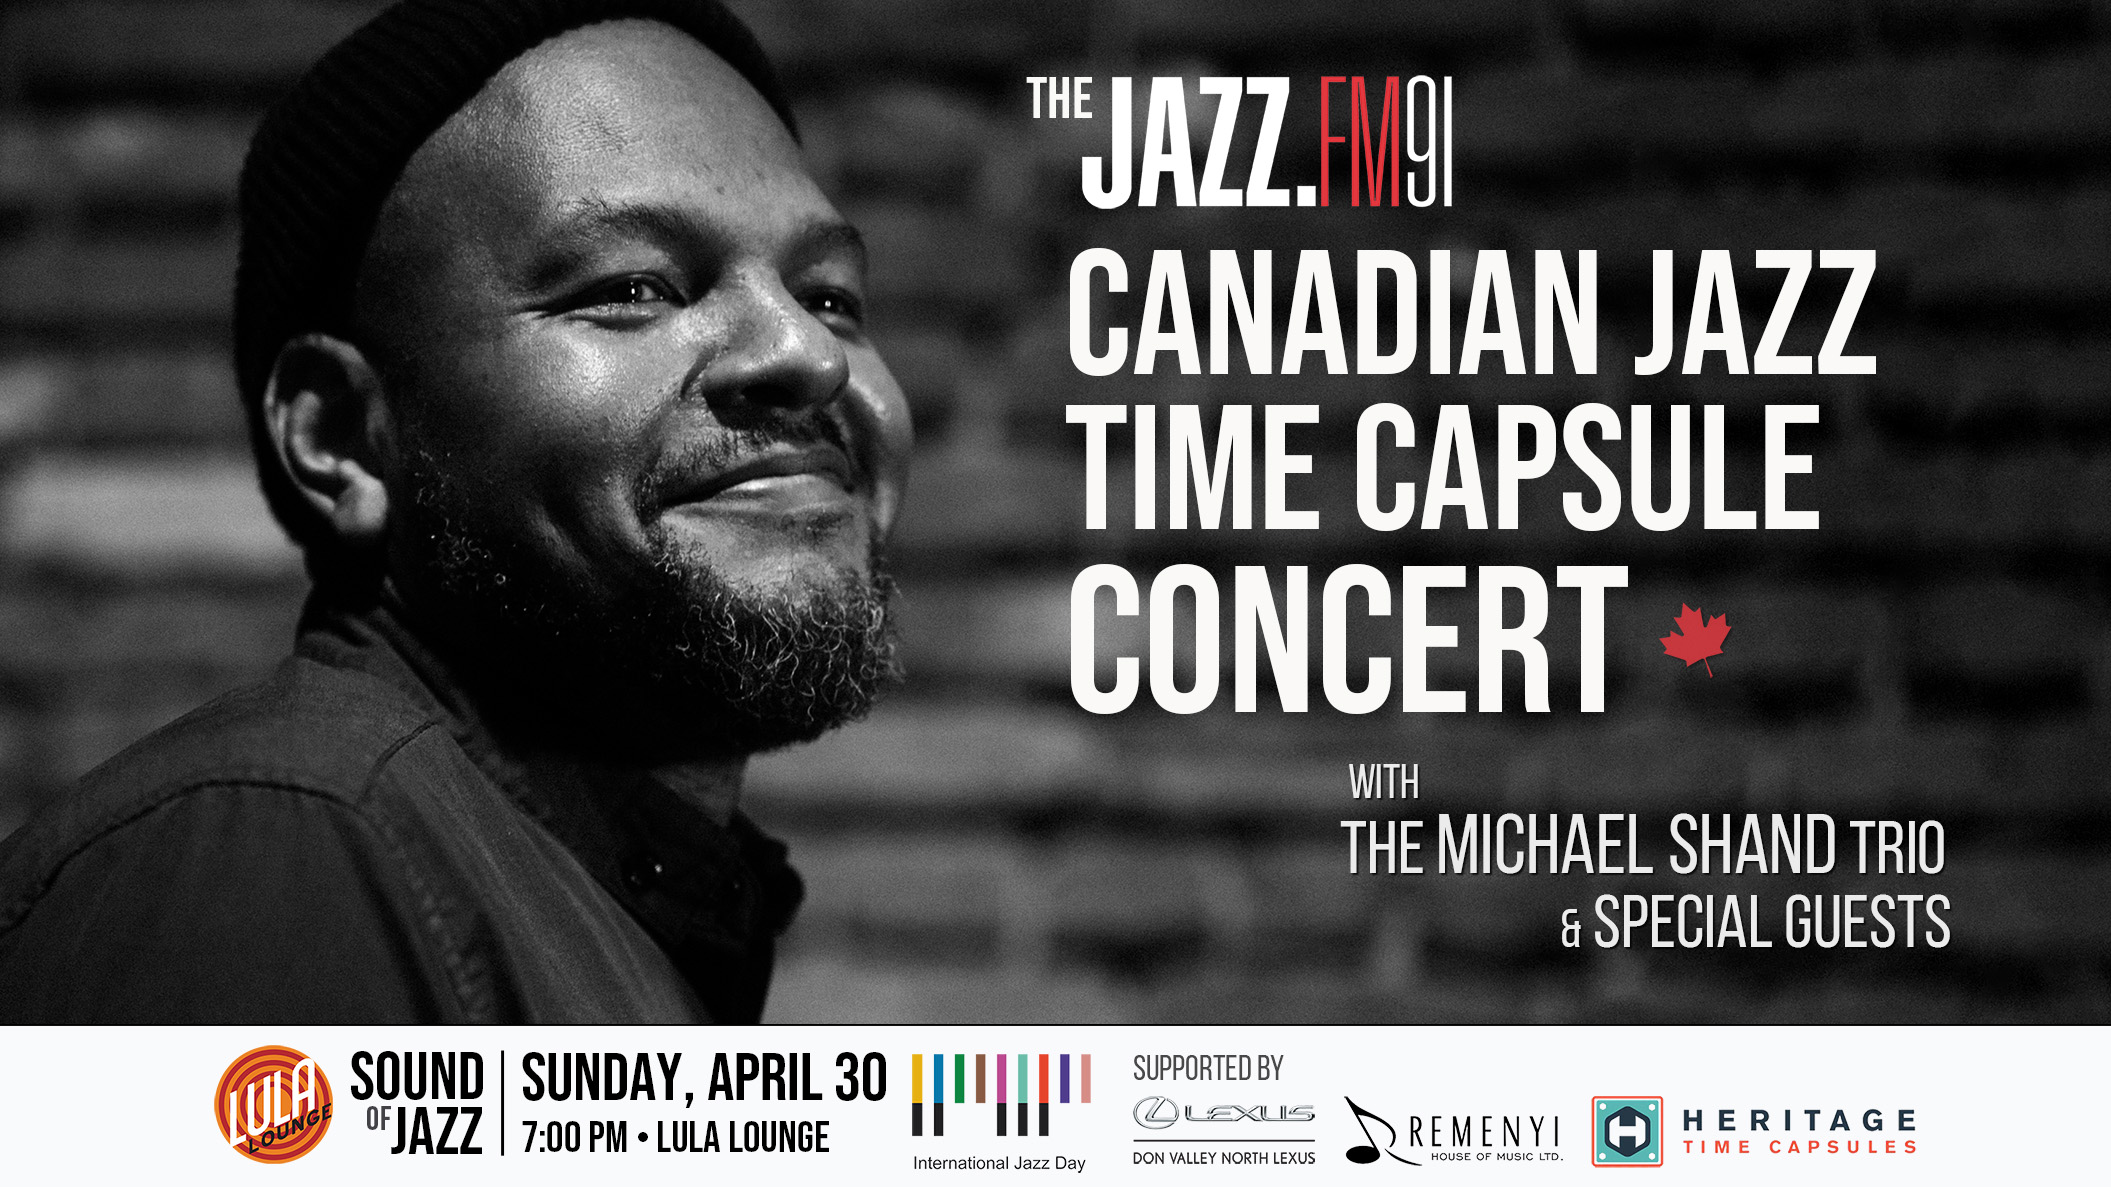 Sound of Jazz: The JAZZ.FM91 Canadian Jazz Time Capsule Concert